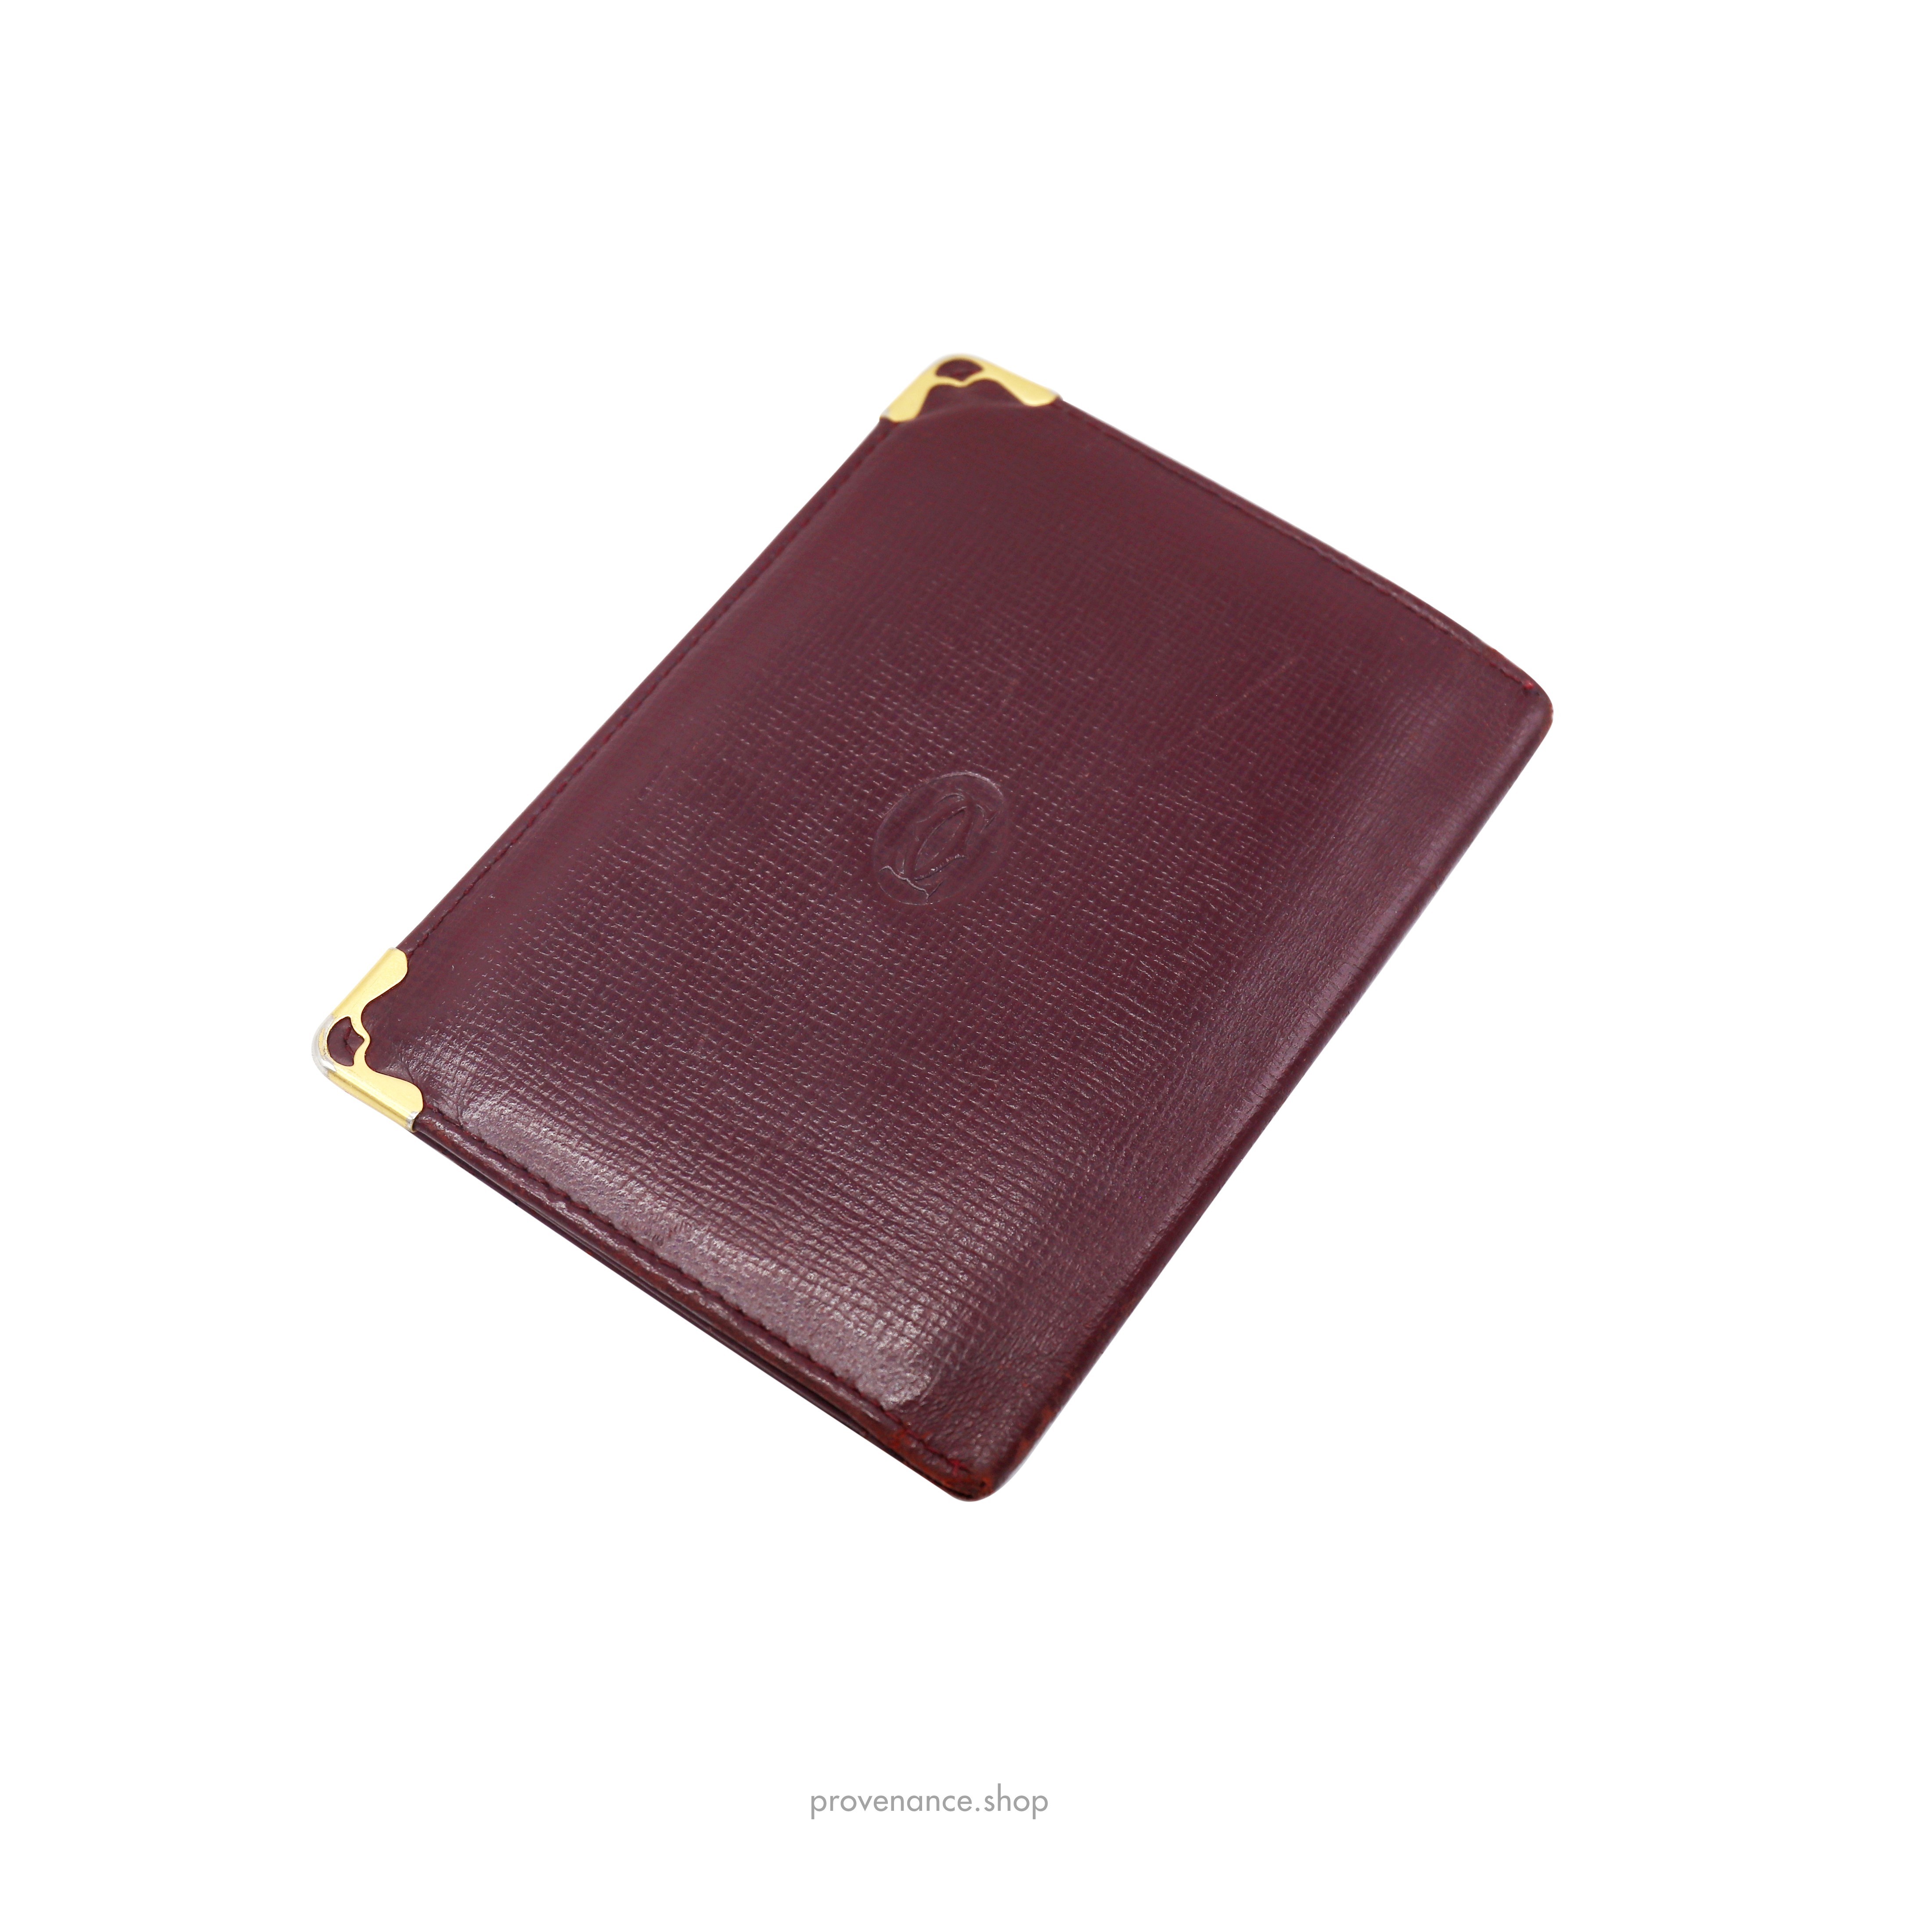 Pocket Organizer Wallet - Burgundy Leather - 4